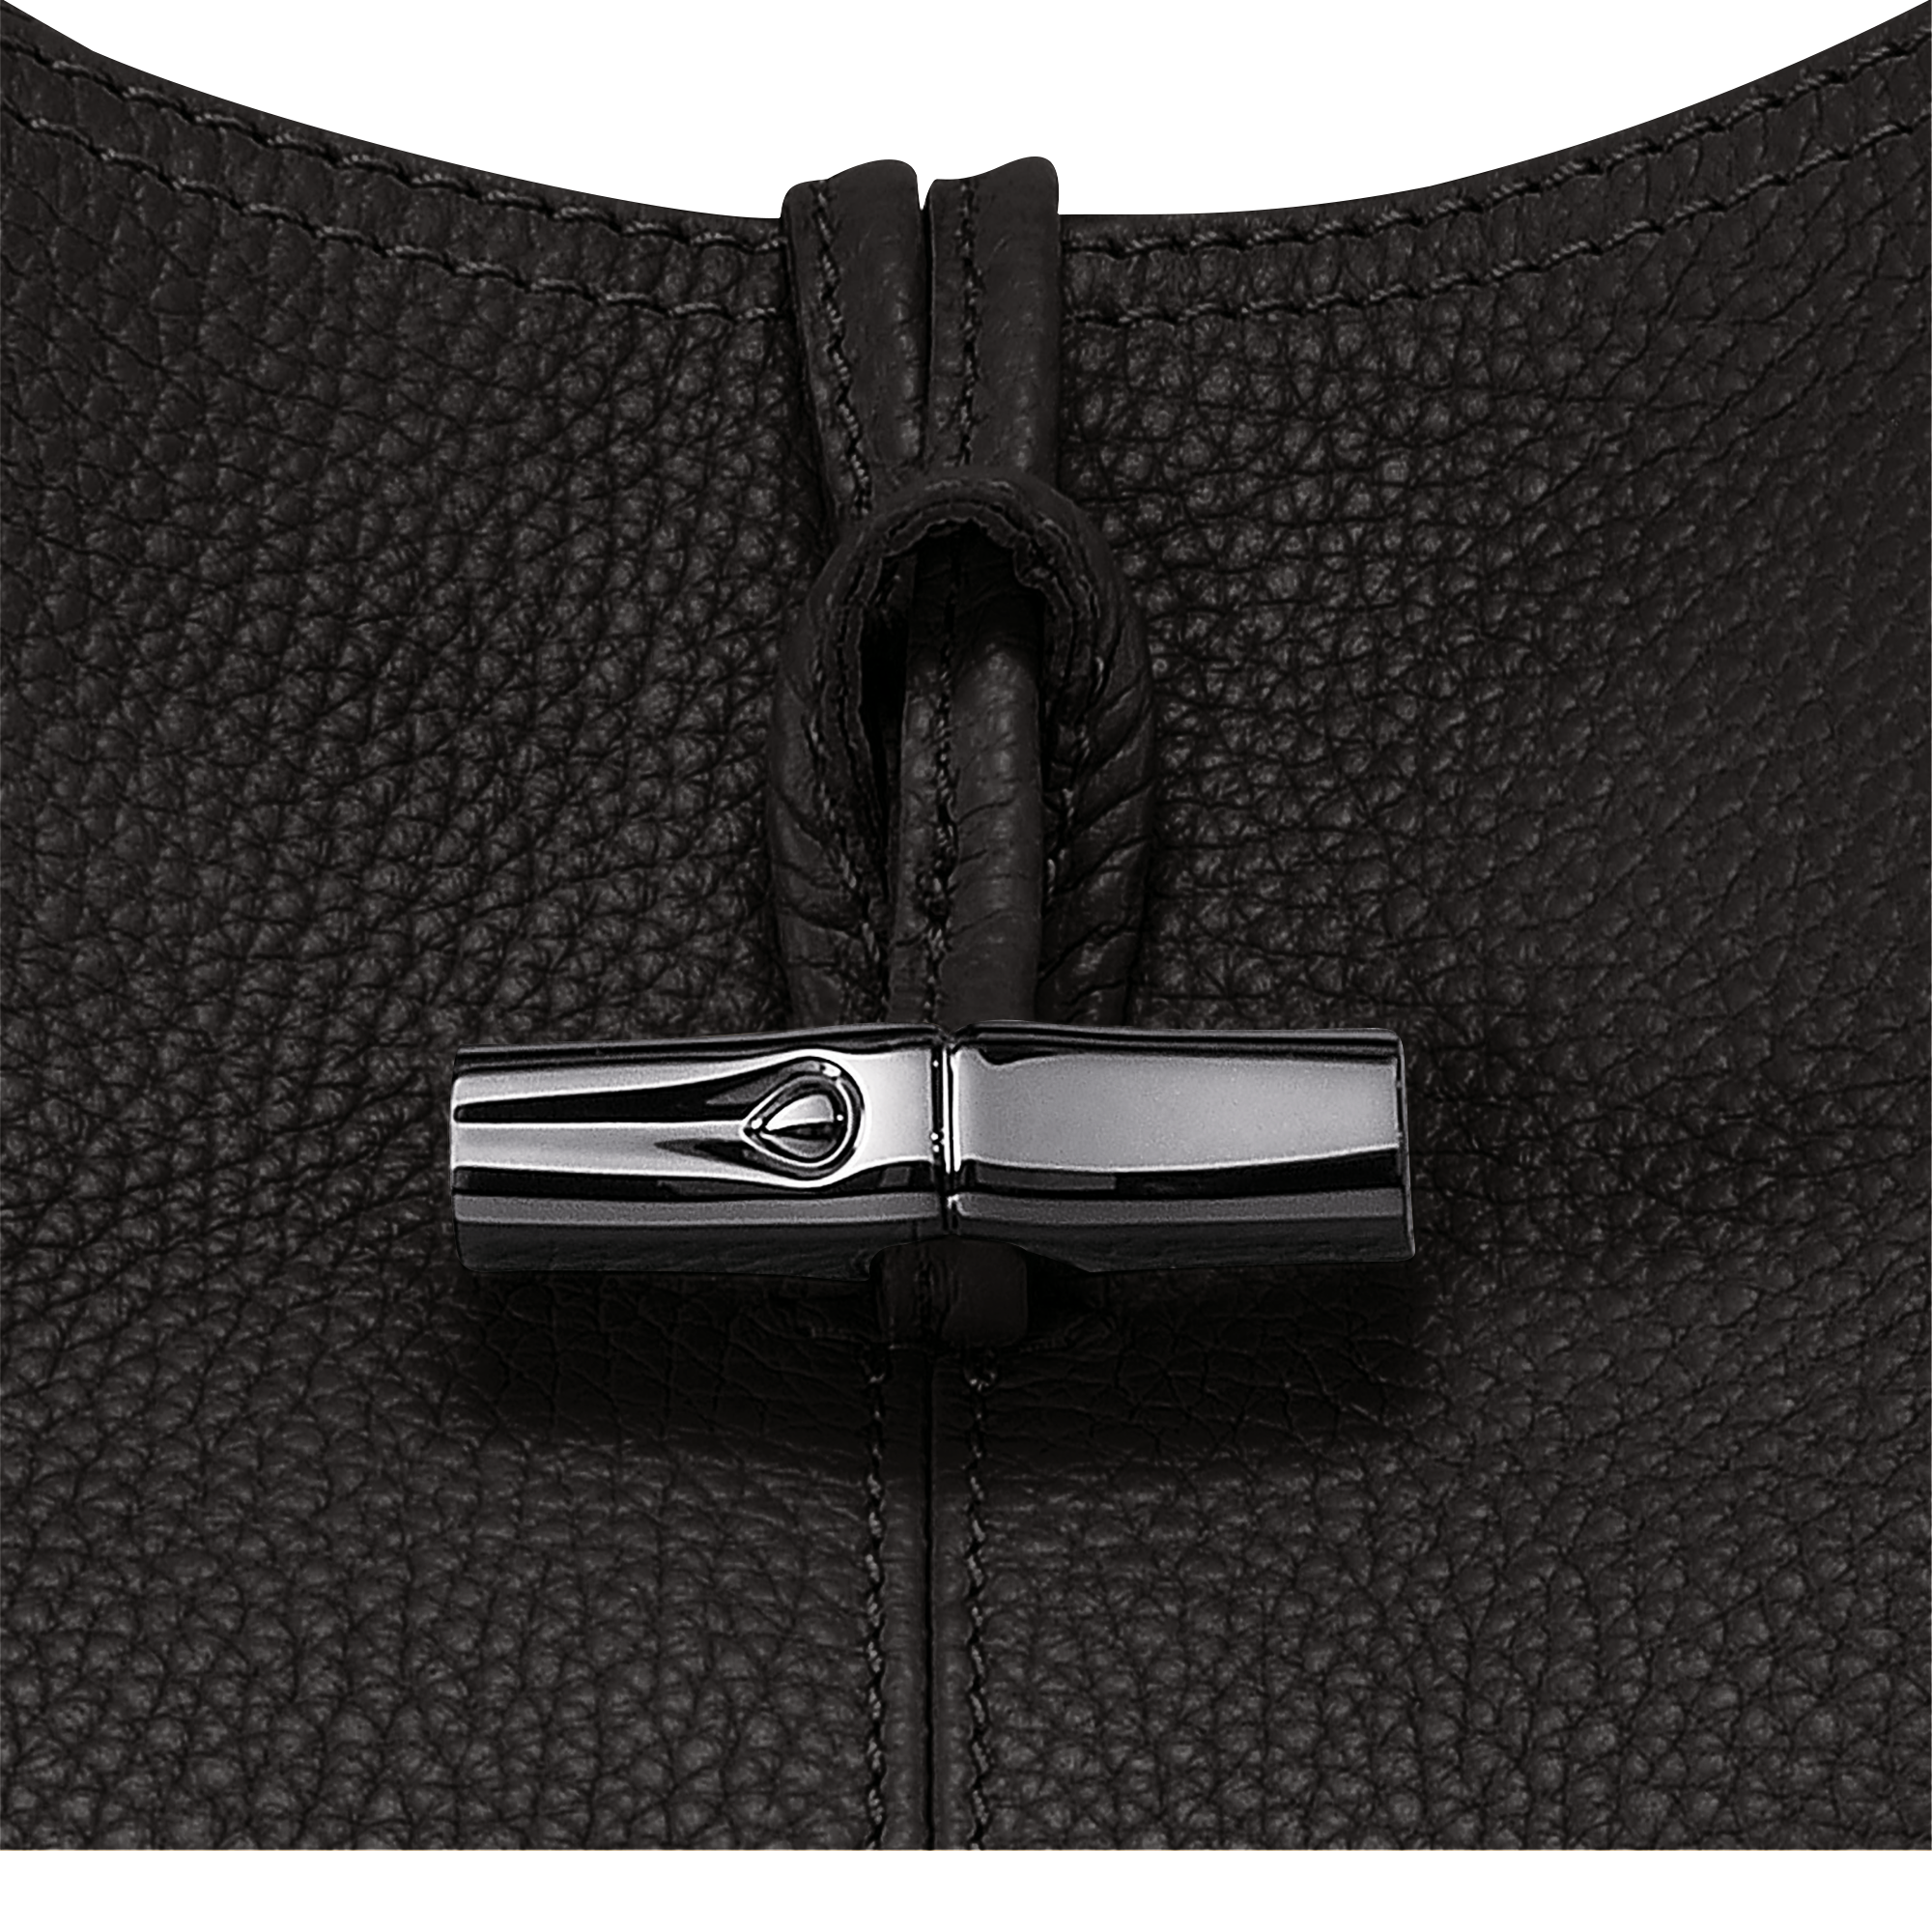 Longchamp Black Leather Roseau Hobo Longchamp